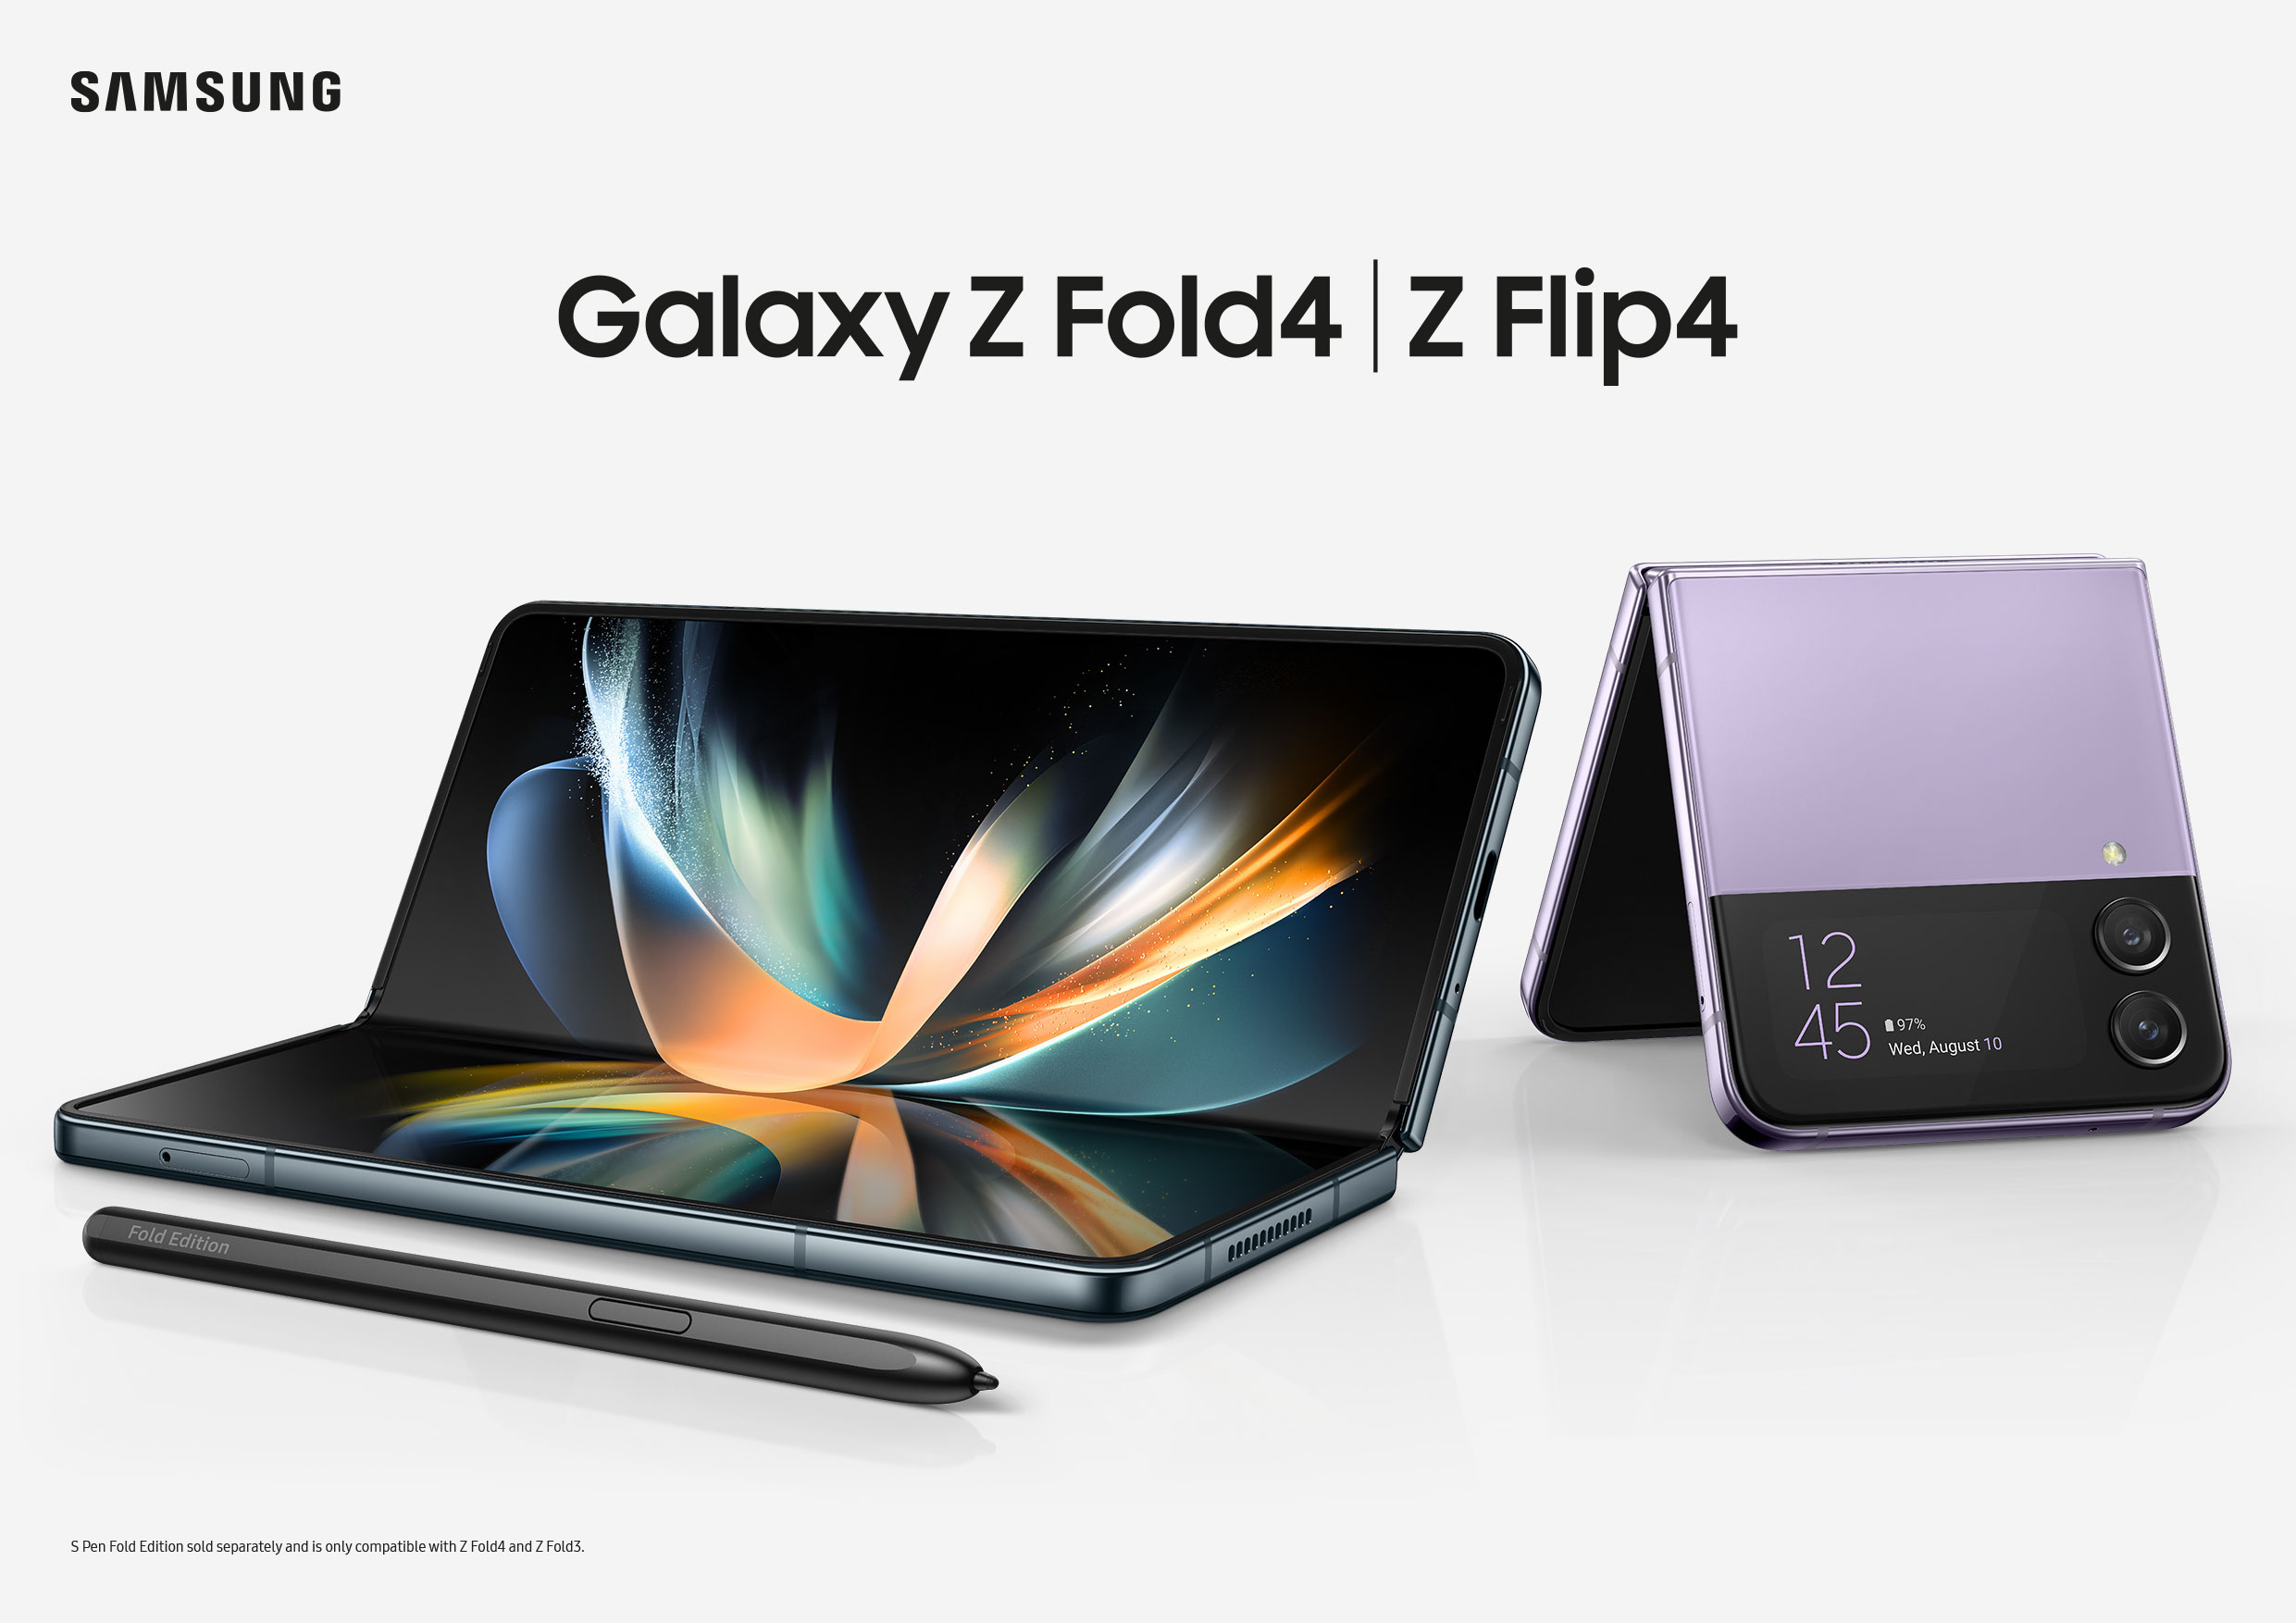 Meet the flexible, foldable Samsung Galaxy Z Fold4 and Z Flip4